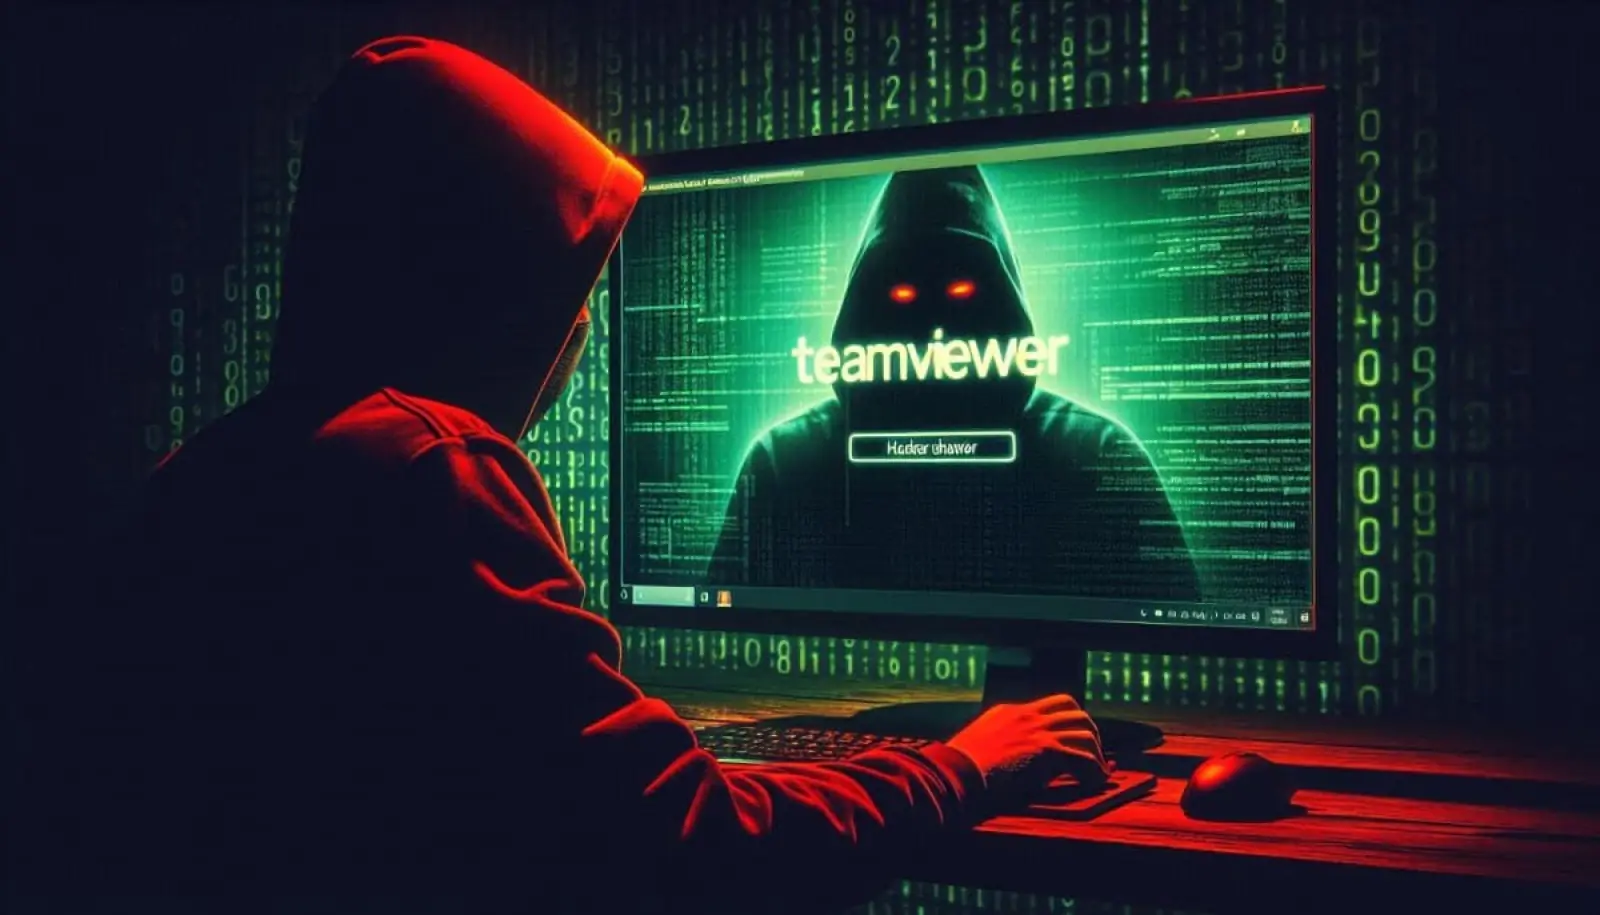 Major cyber attack on TeamViewer, Russian hacker broke into corporate network